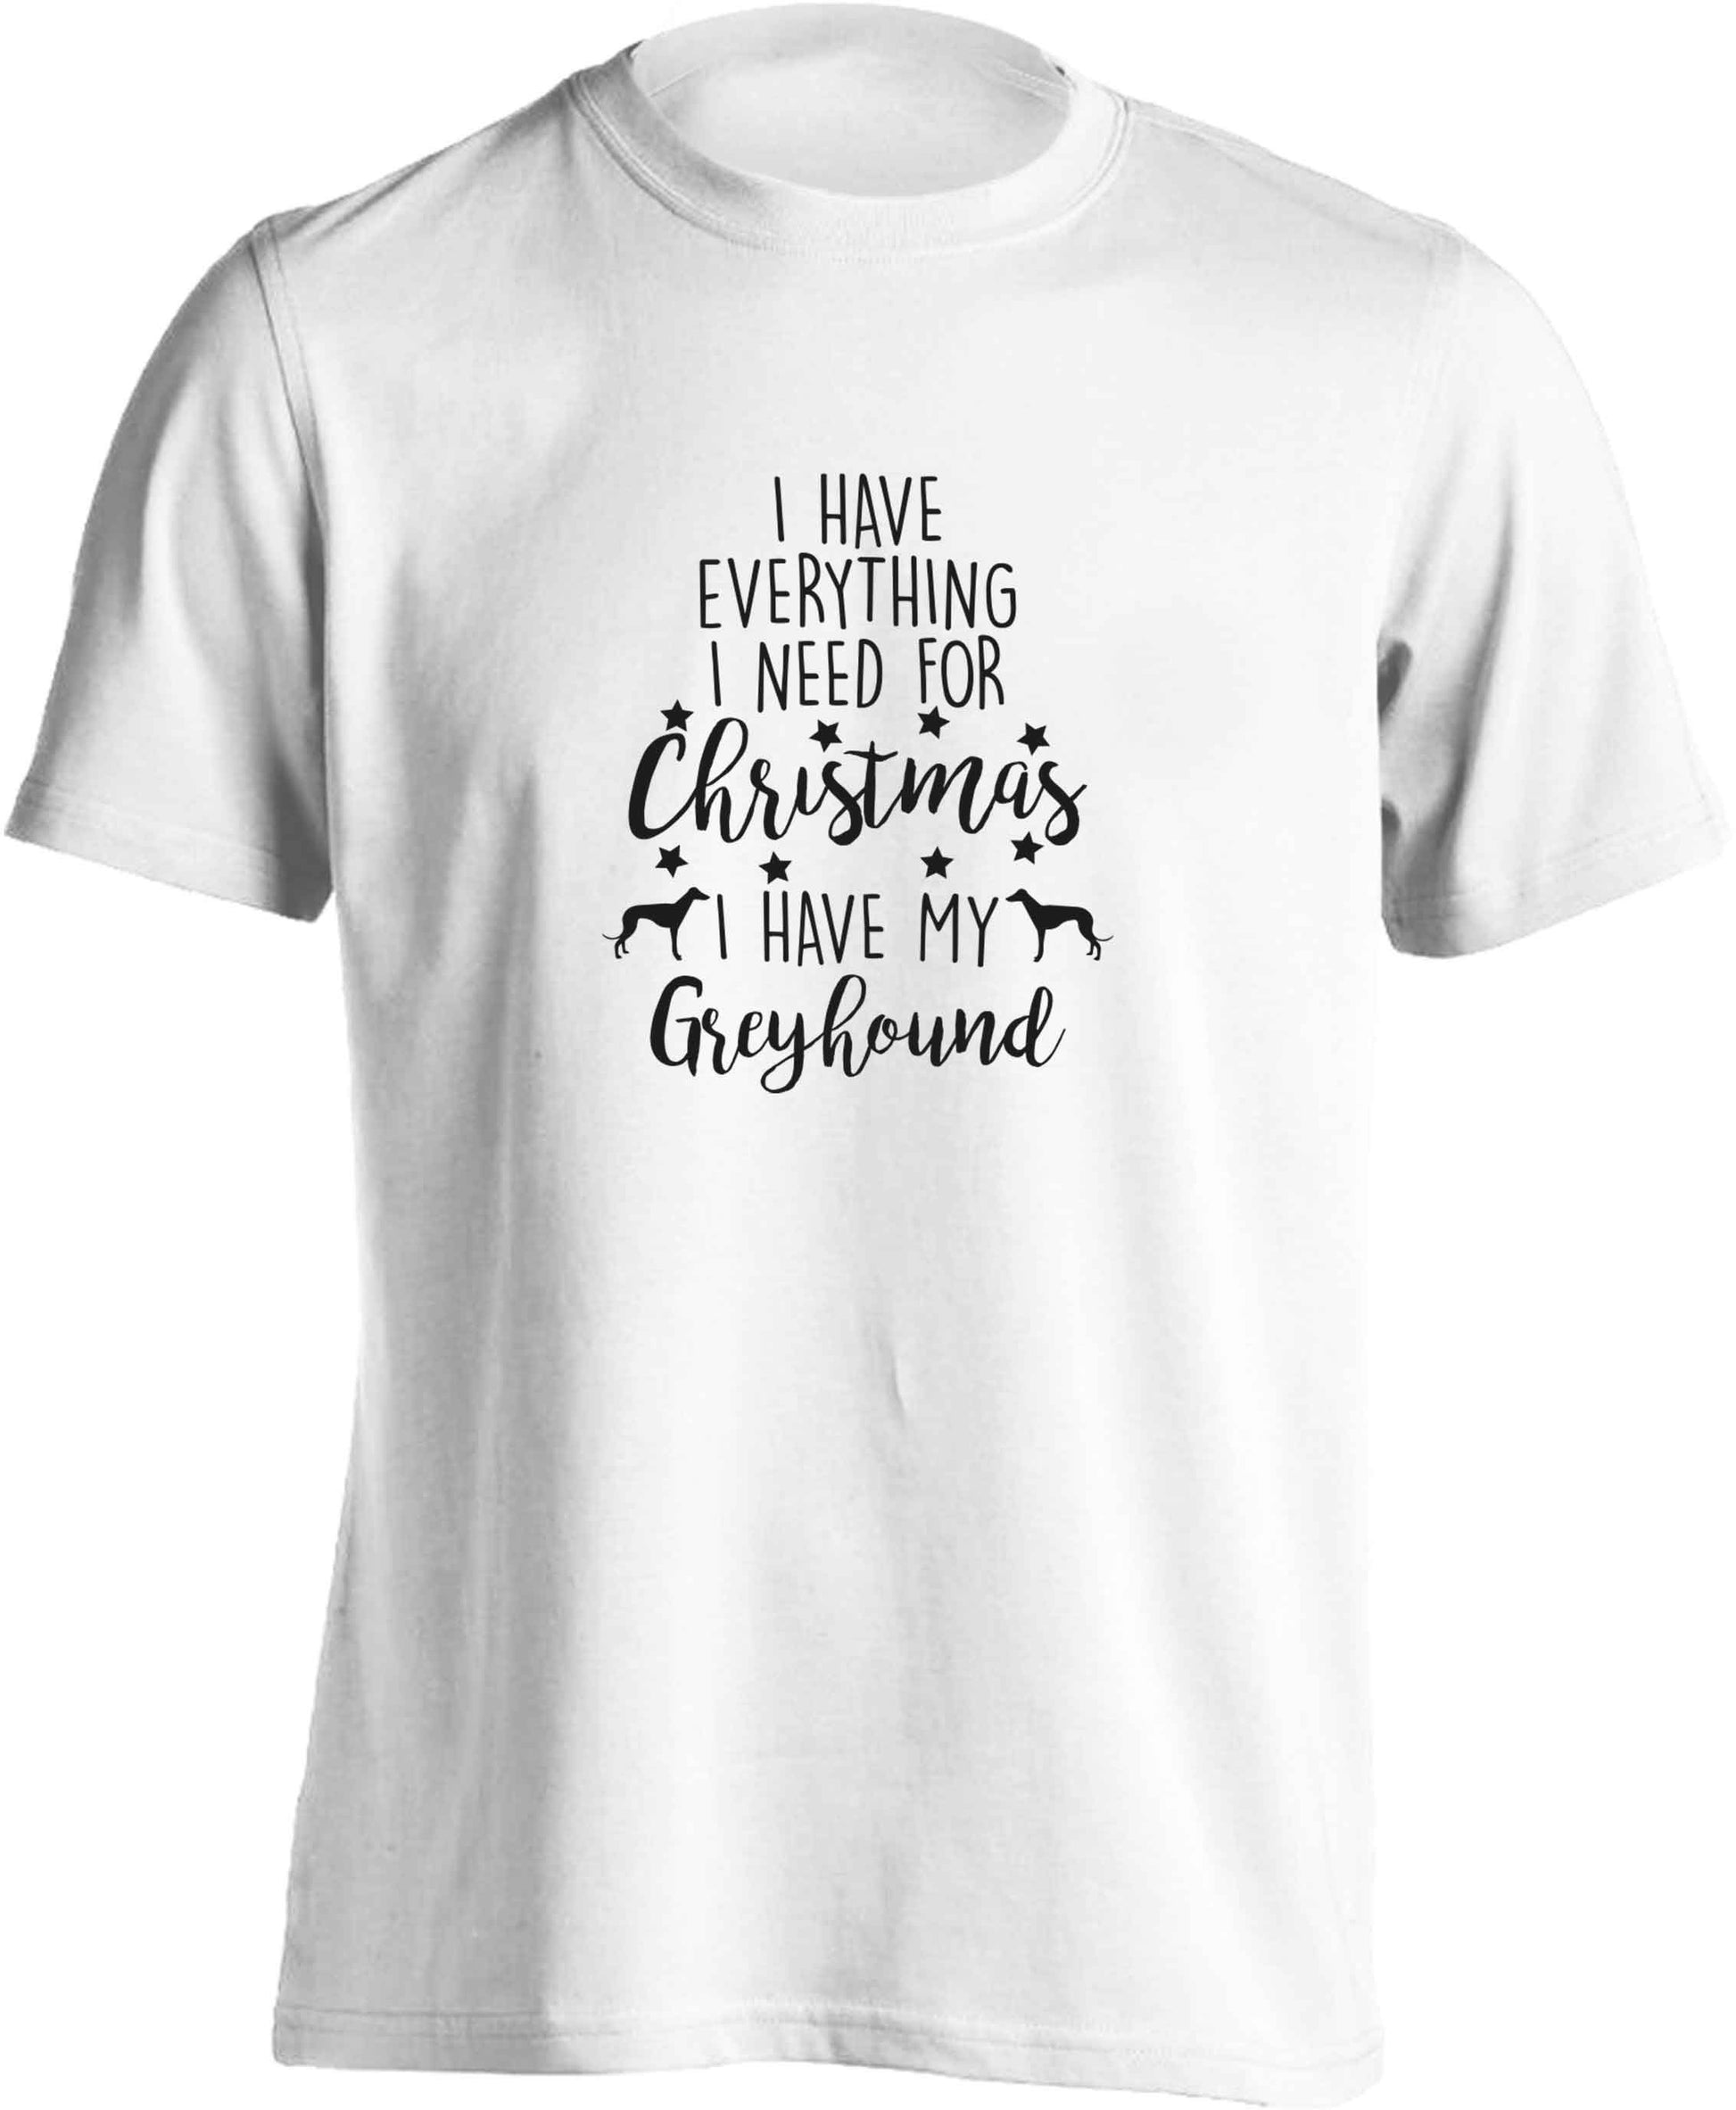 I have everything I need for Christmas I have my greyhound adults unisex white Tshirt 2XL